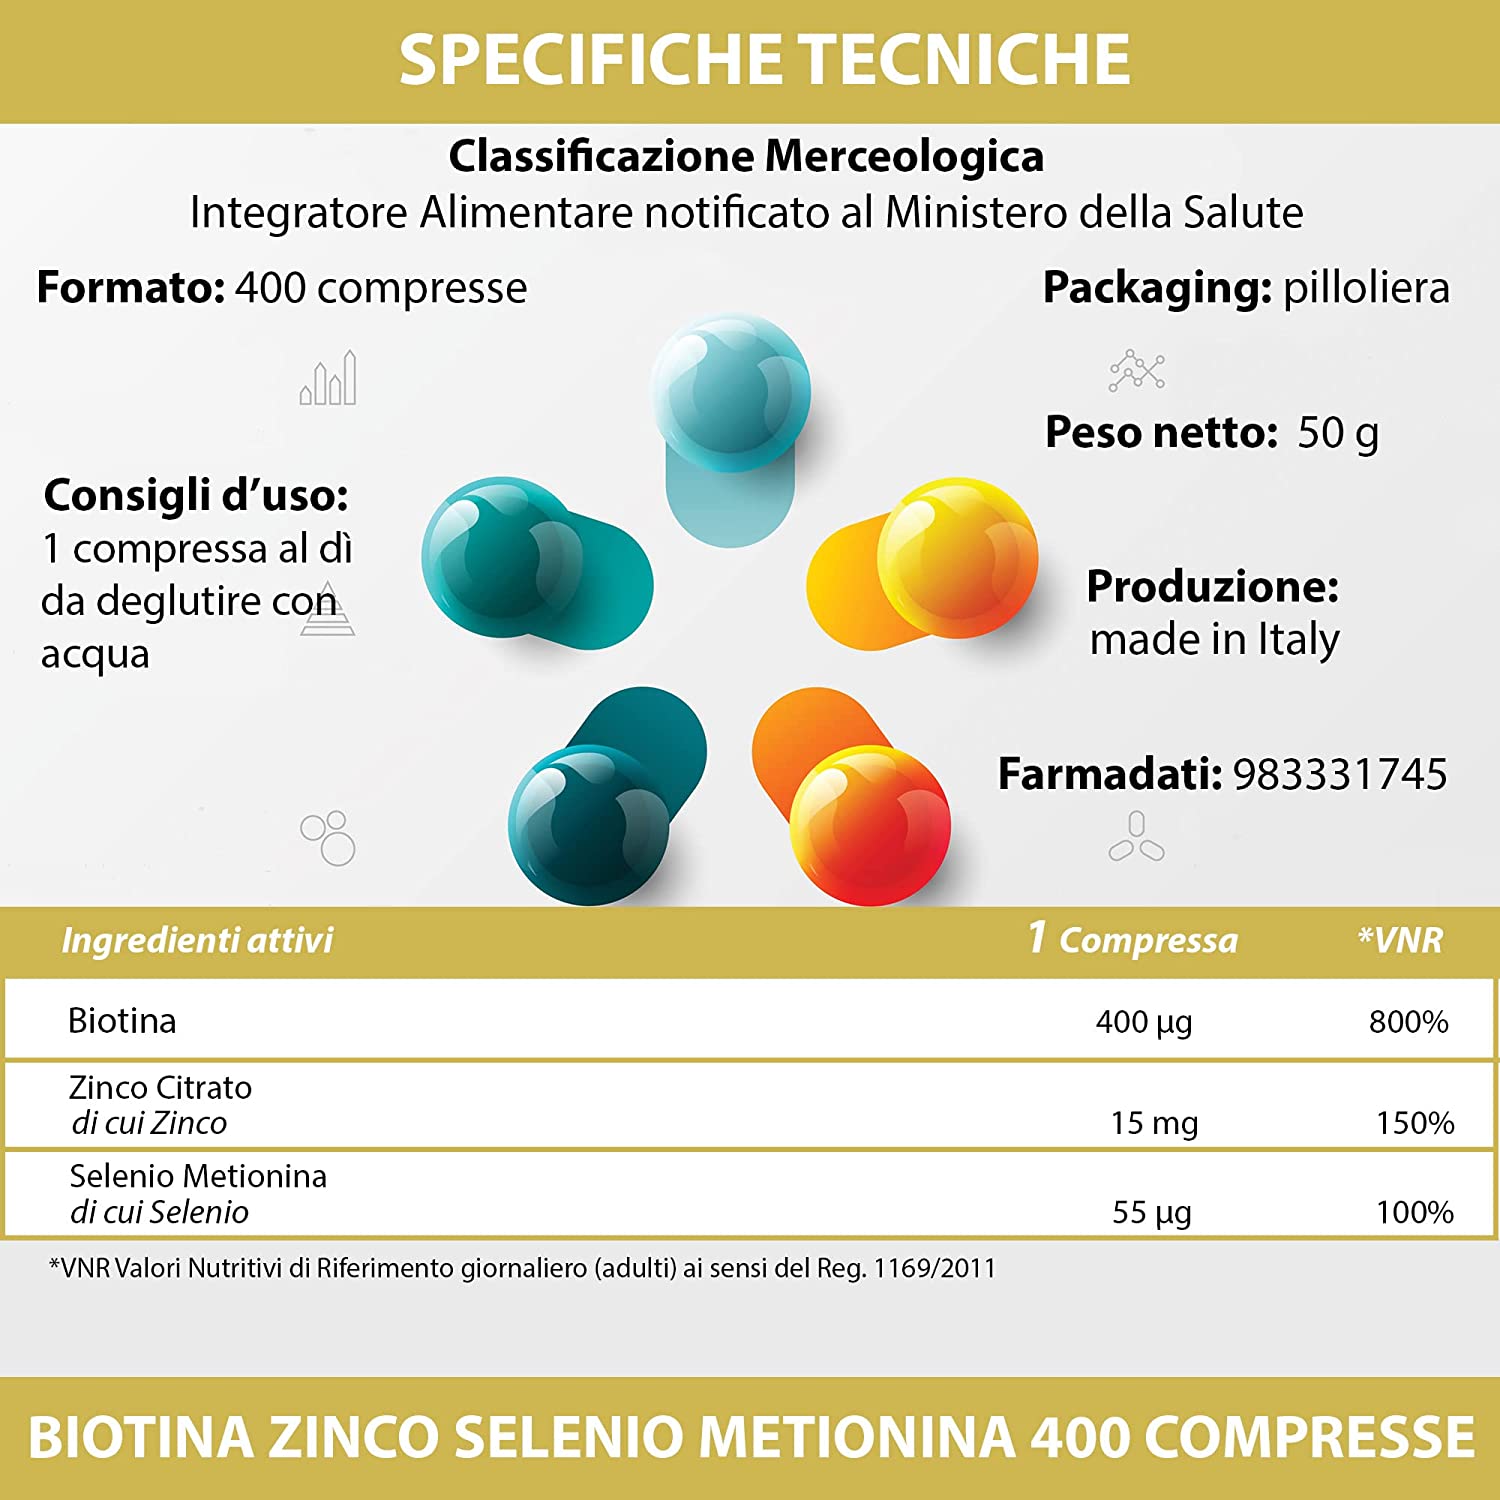 Biotina Zinco Selenio Metionina - 400 compresse - Integratori Alimentari